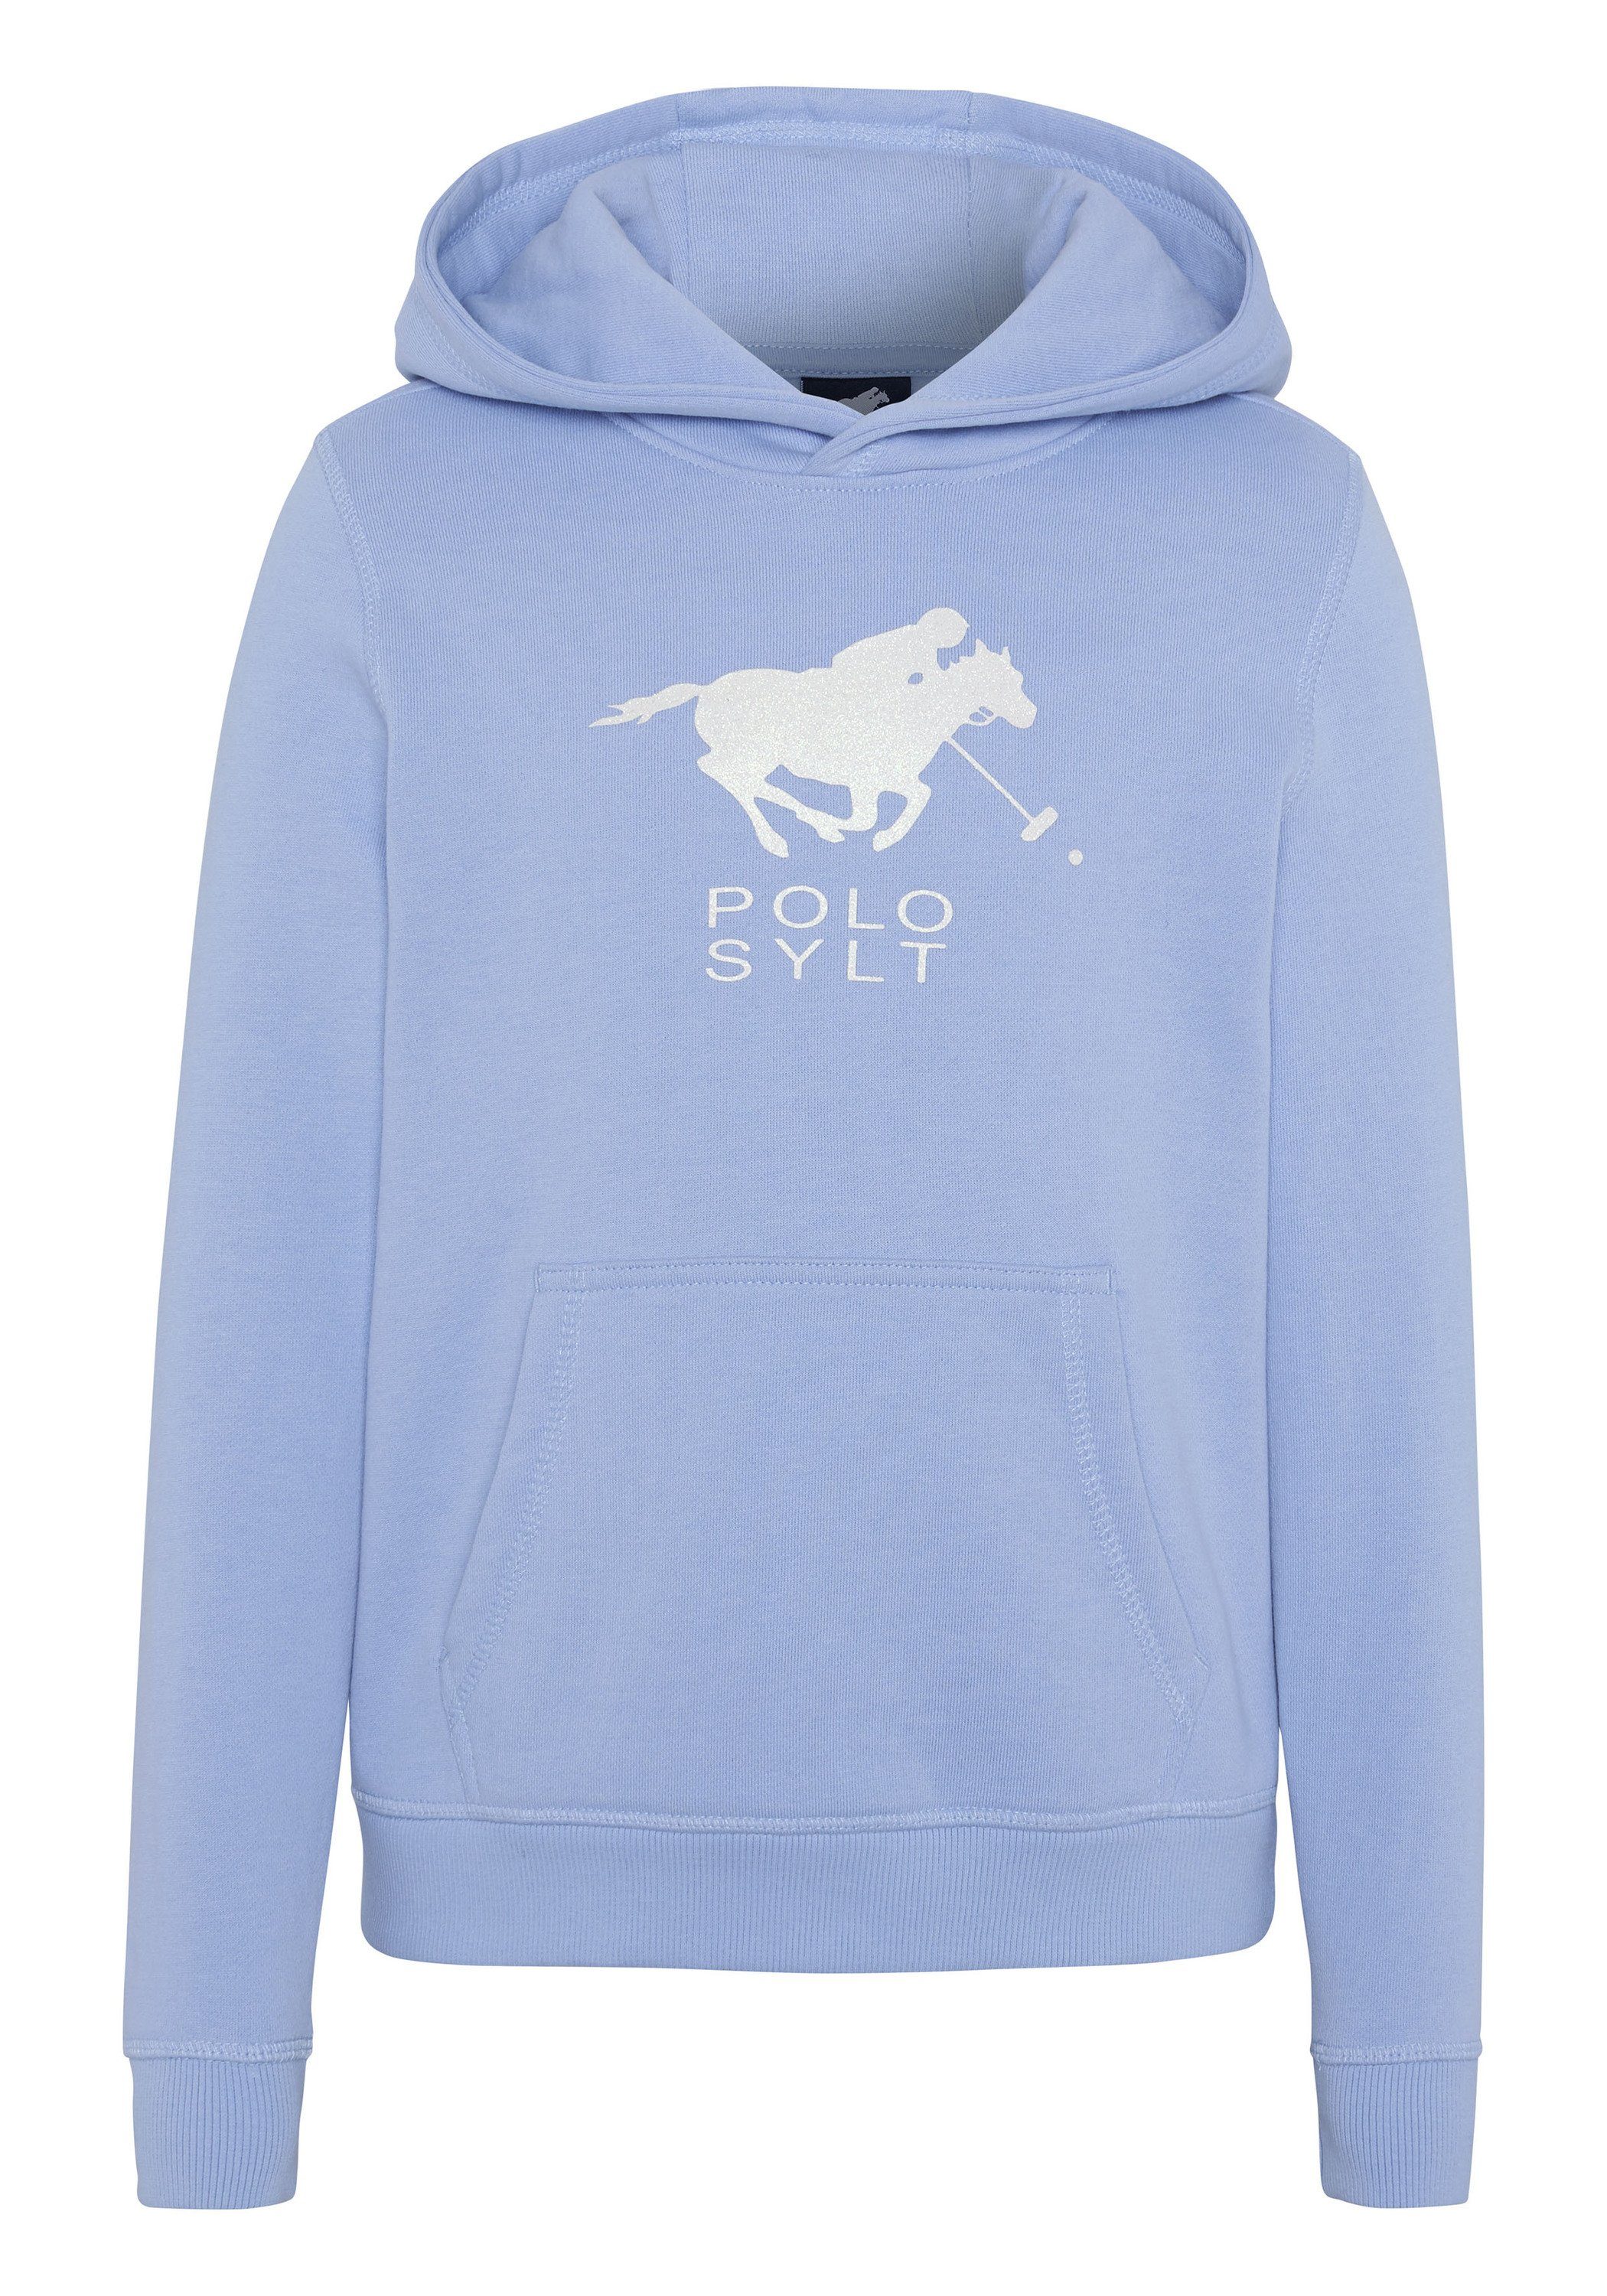 Polo Sylt Blue mit Label-Motiv Sweatshirt glitzerndem Brunnera